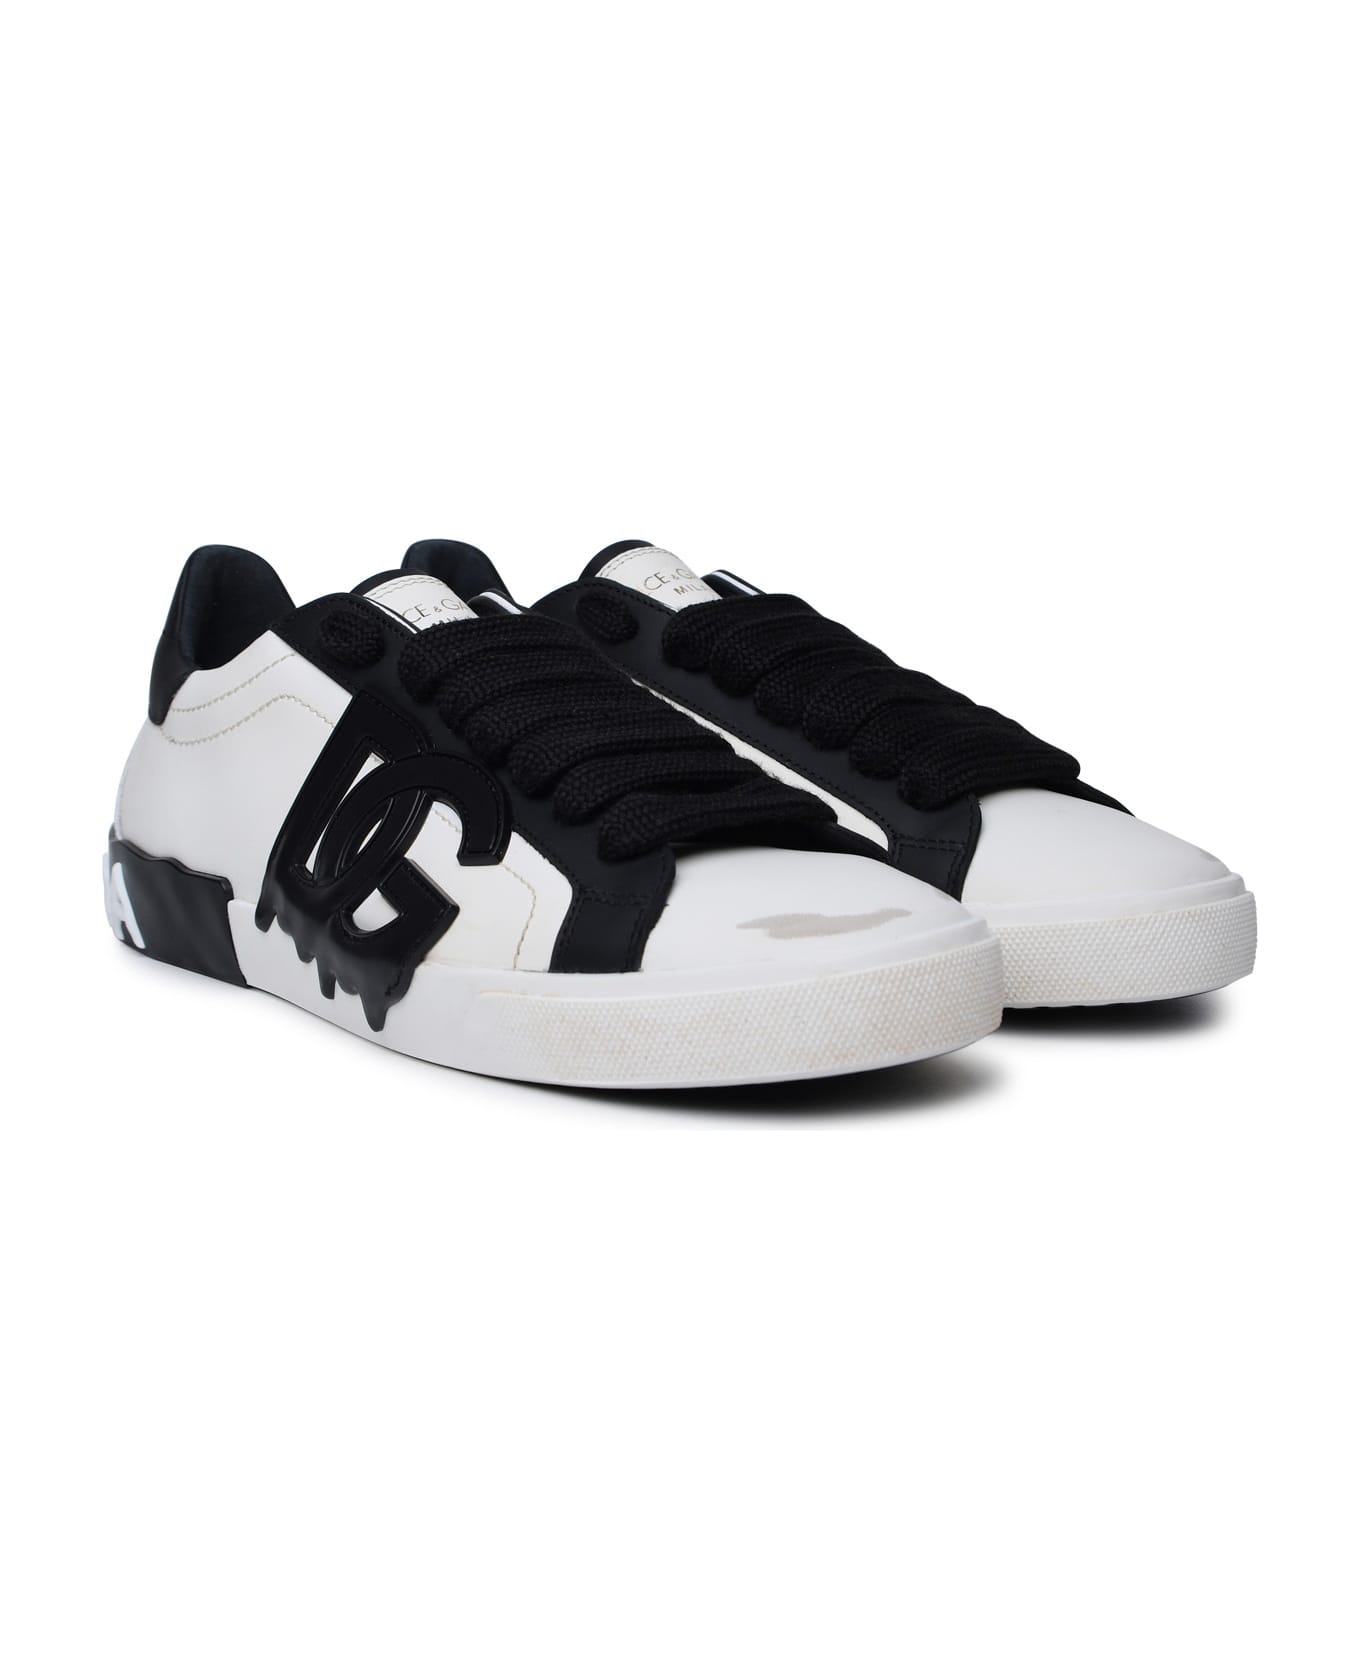 Dolce & Gabbana Portofino Vintage Leather Sneaker - white/black スニーカー